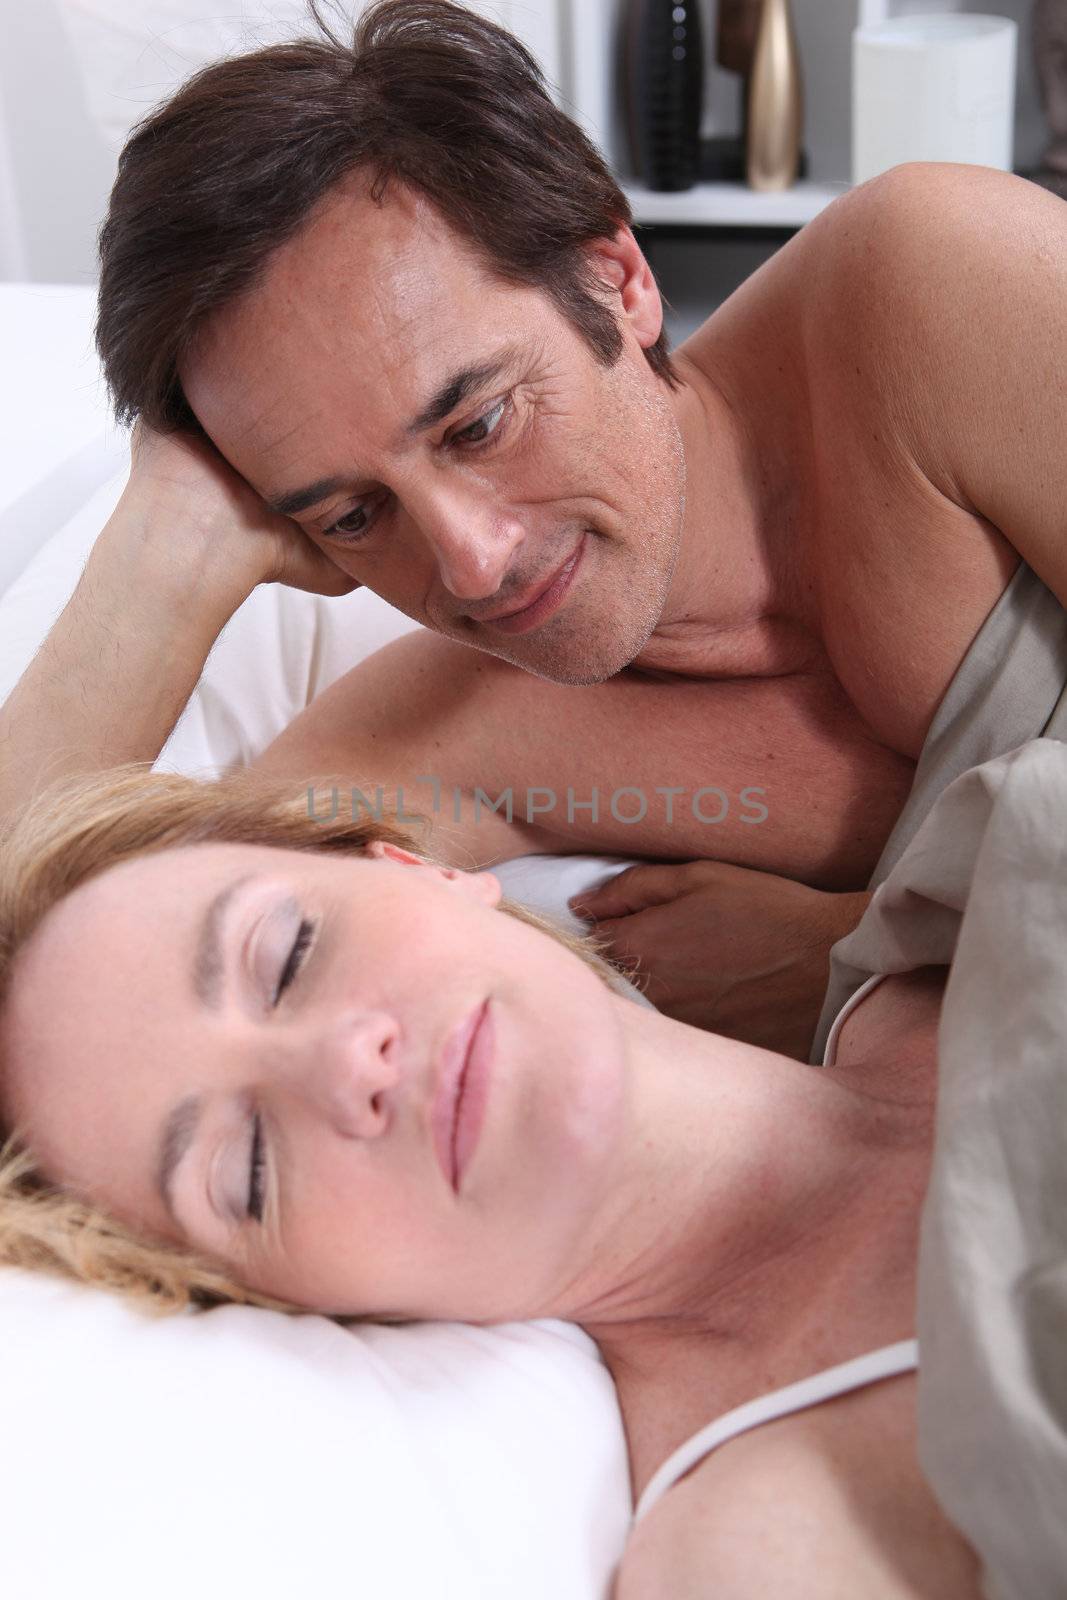 Man watching woman sleeping by phovoir